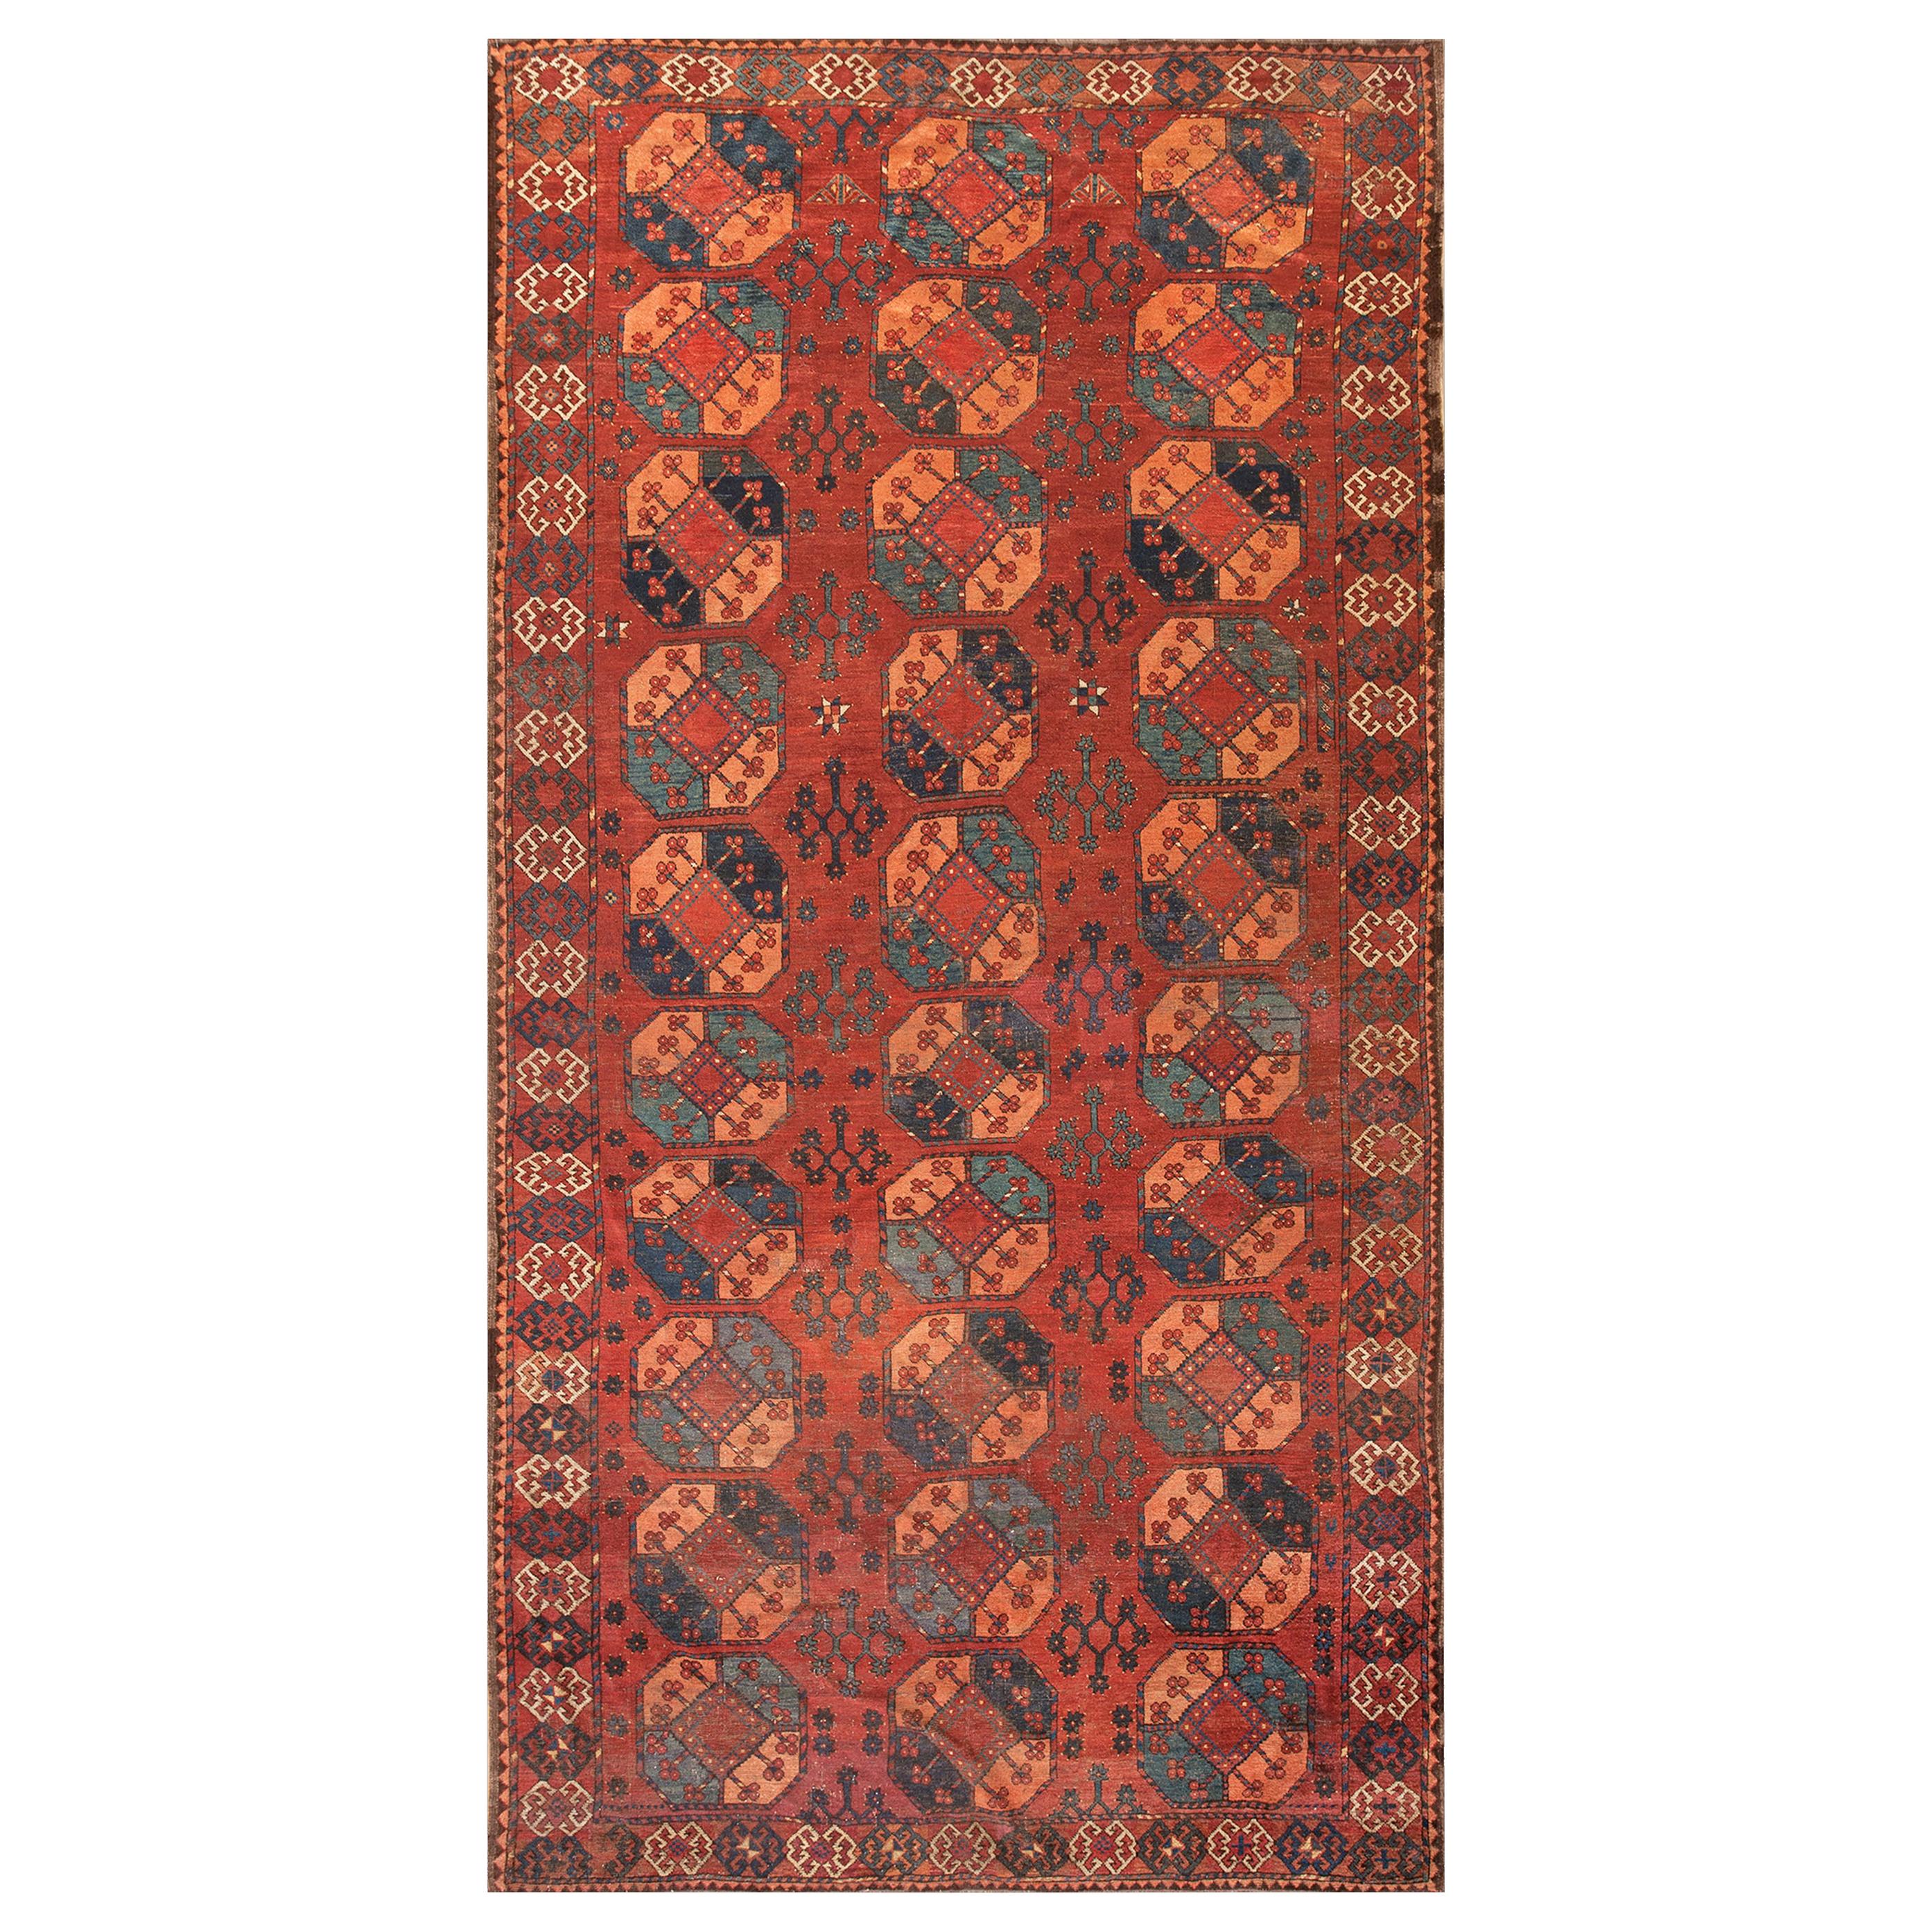 19th Century Central Asian Ersari Gallery Carpet ( 6'8" x 13' - 203 x 396 )